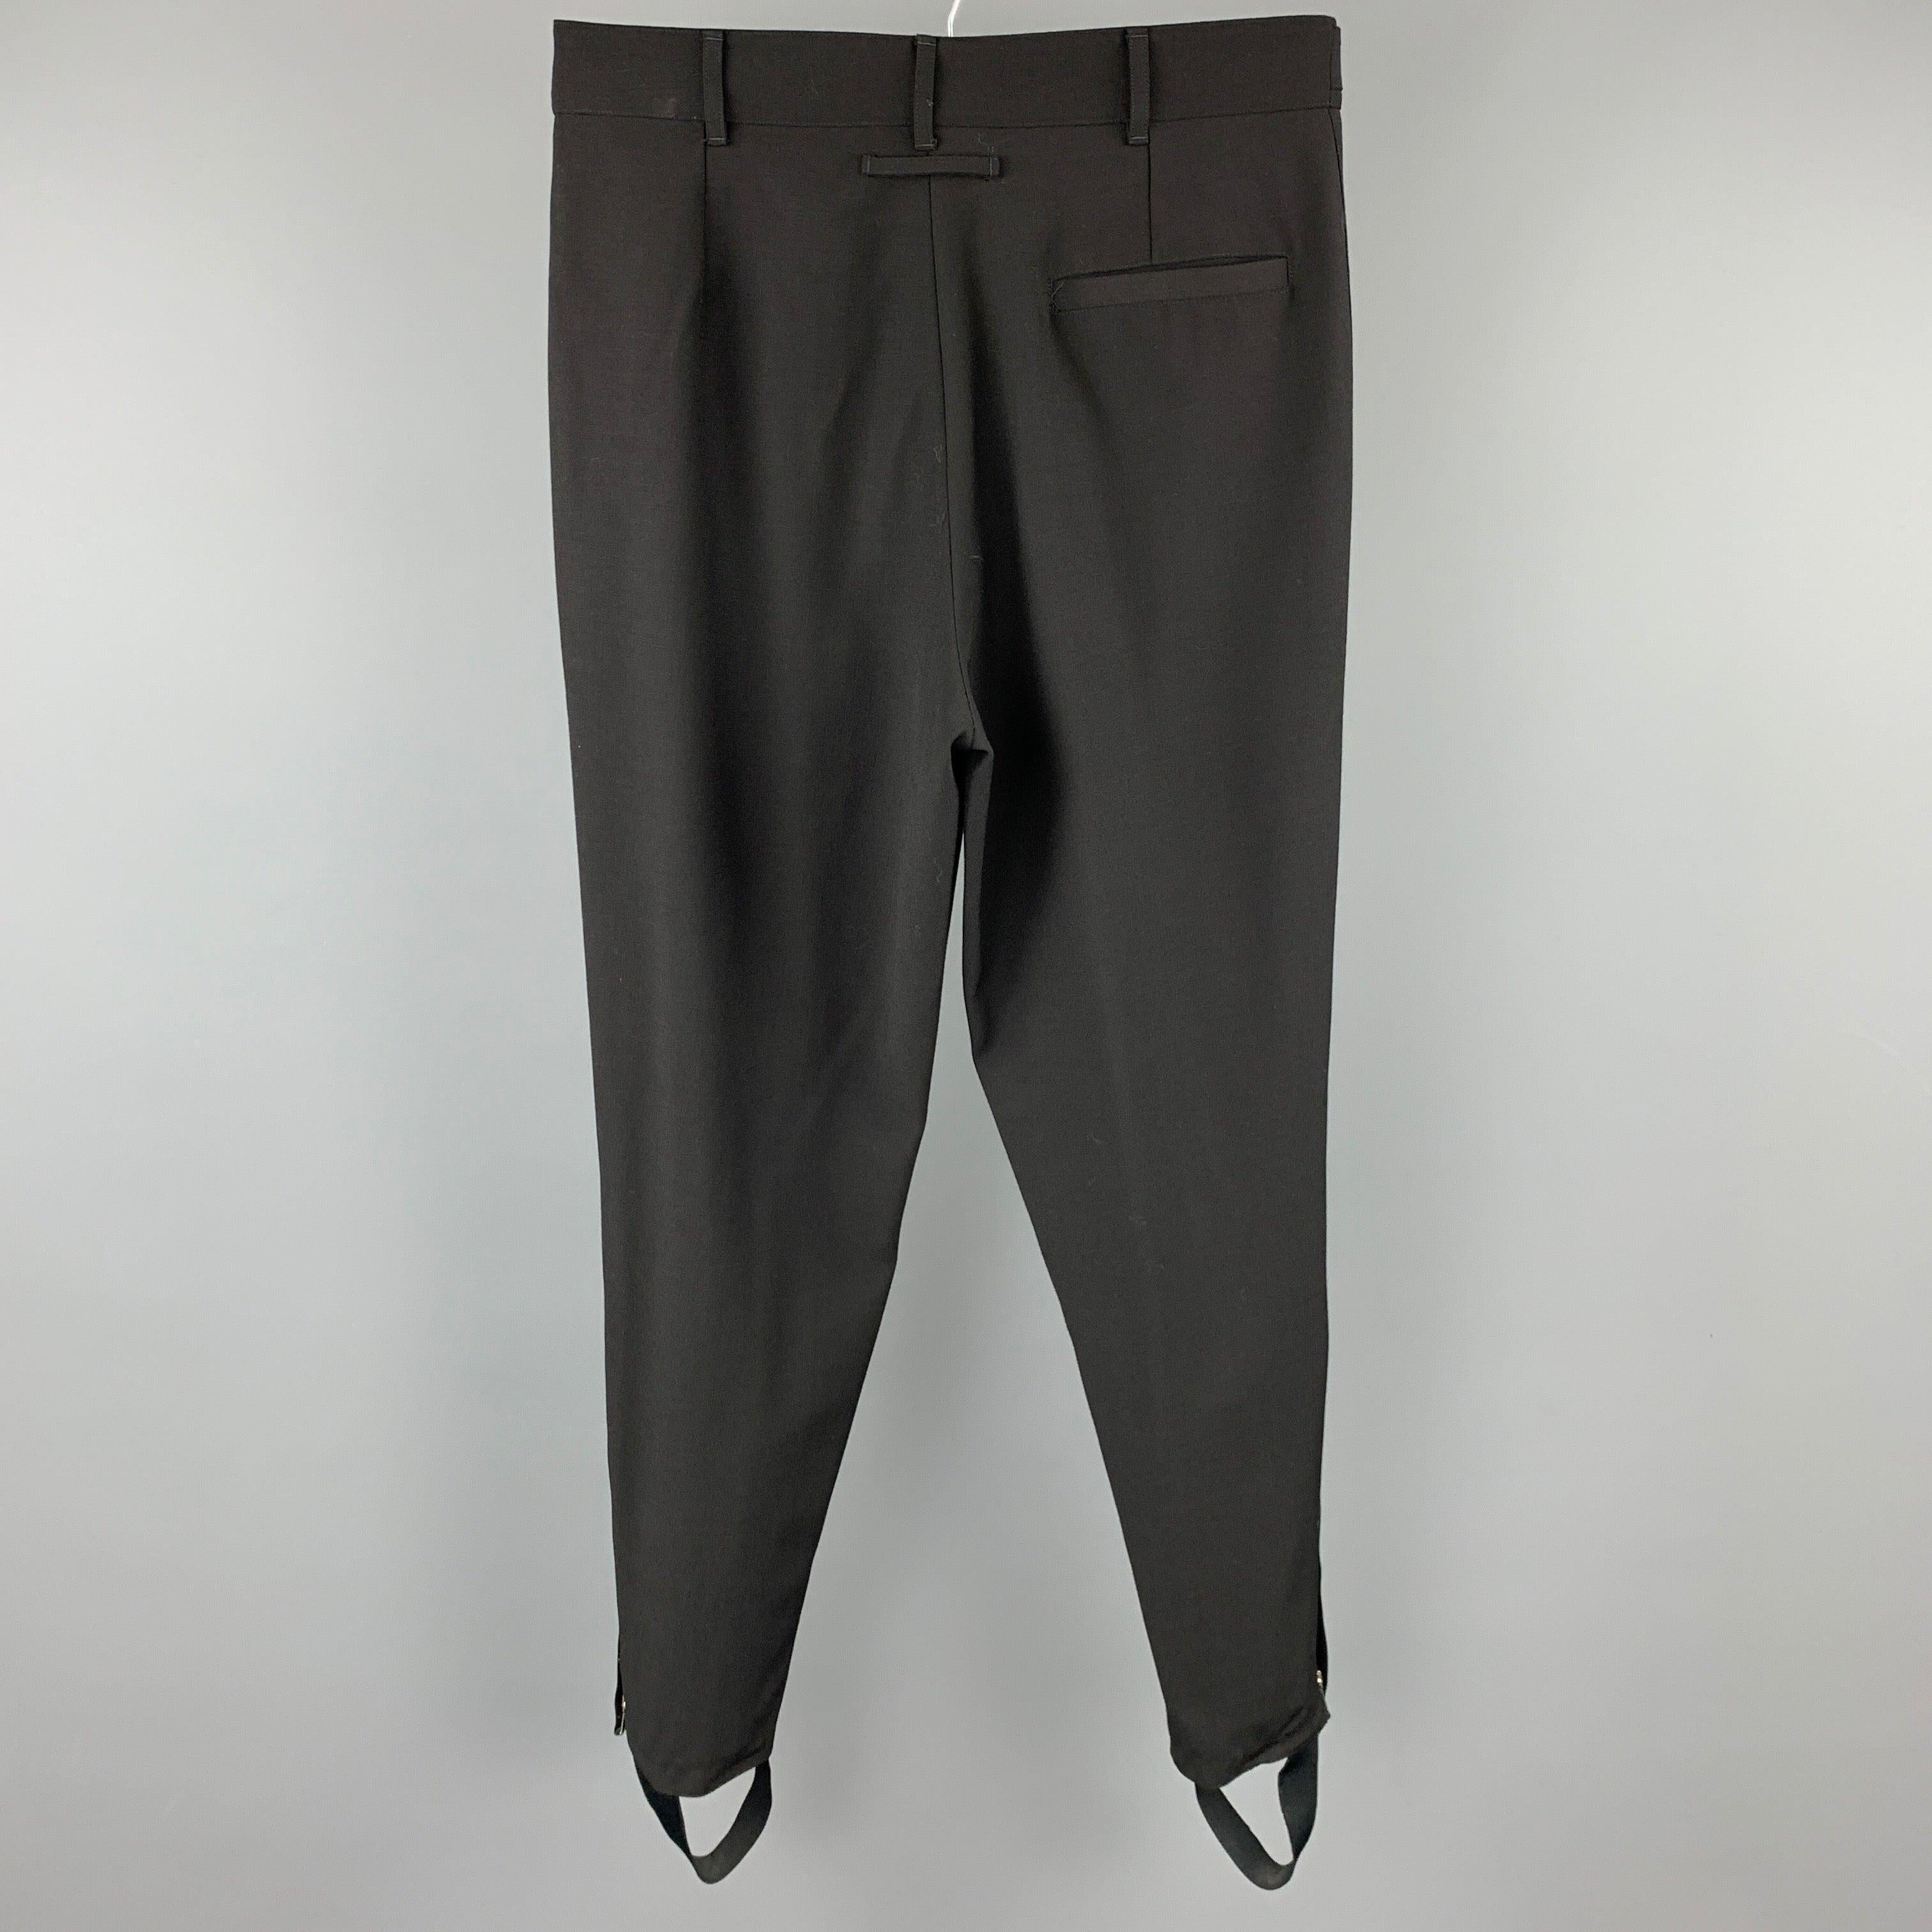 Vintage JEAN PAUL GAULTIER Size 34 Black Jodhpurs Dress Pants In Good Condition For Sale In San Francisco, CA